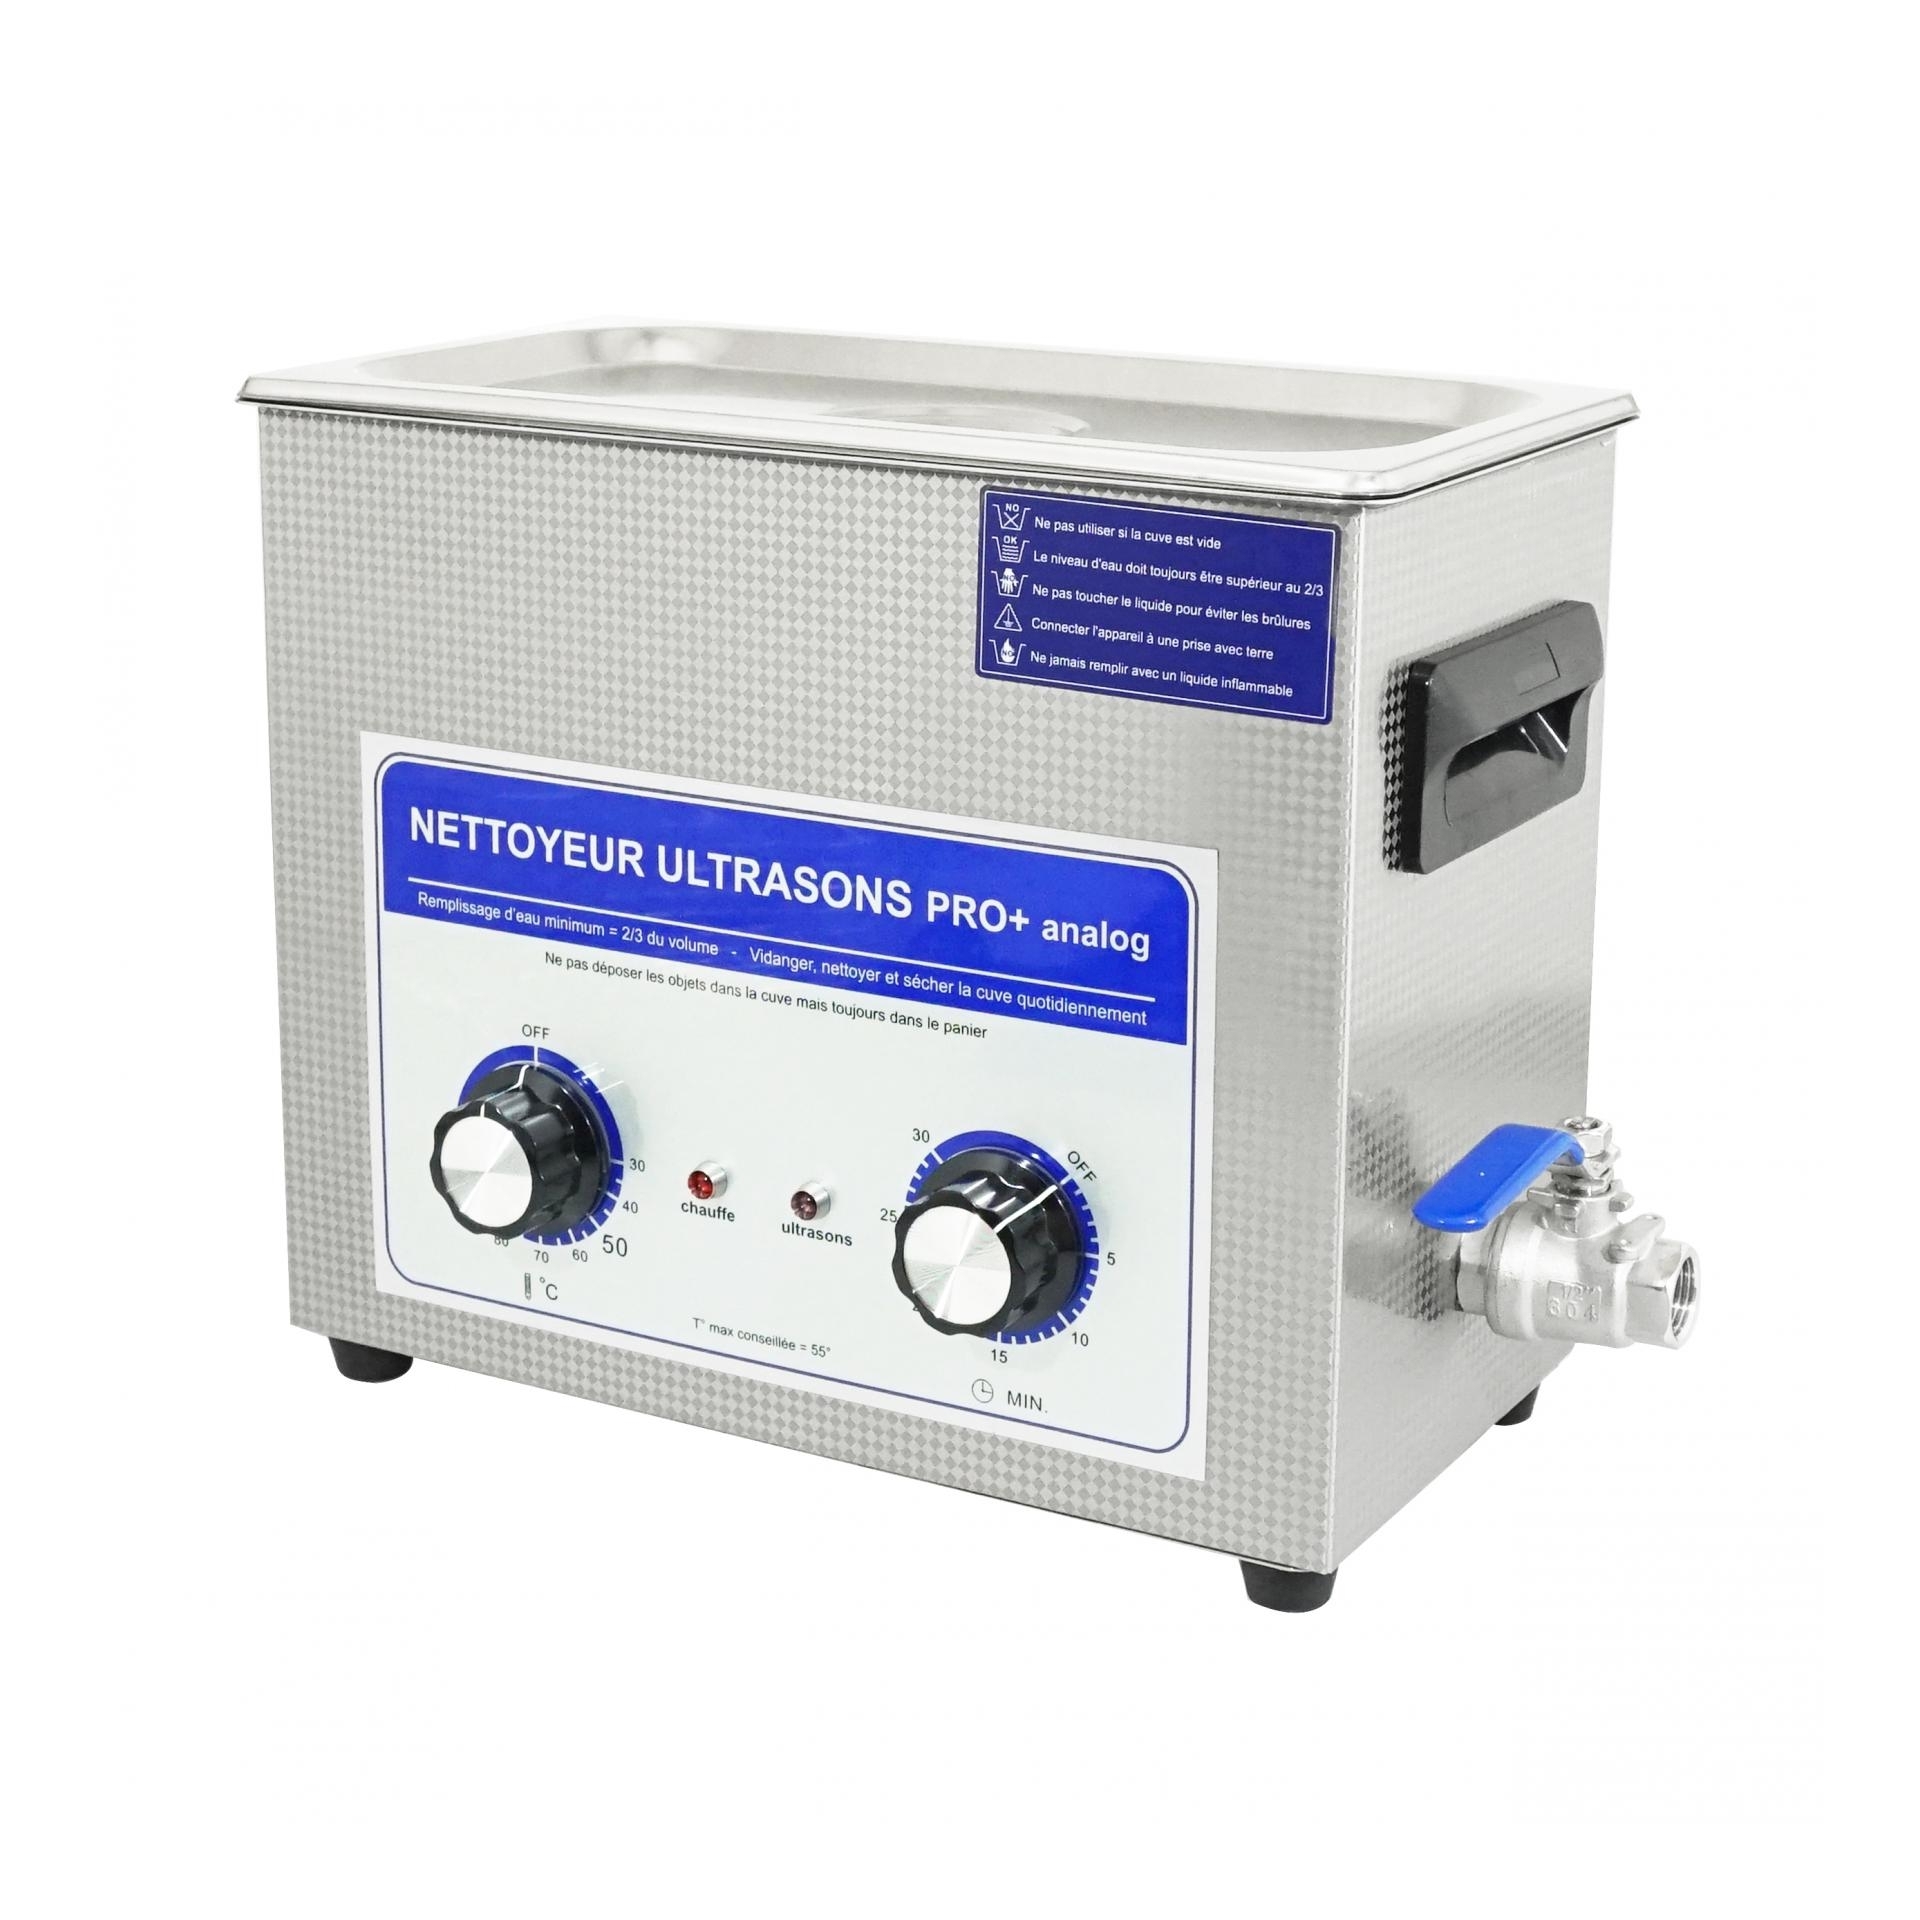 Bac nettoyeur ultrason 20 litres / analogique